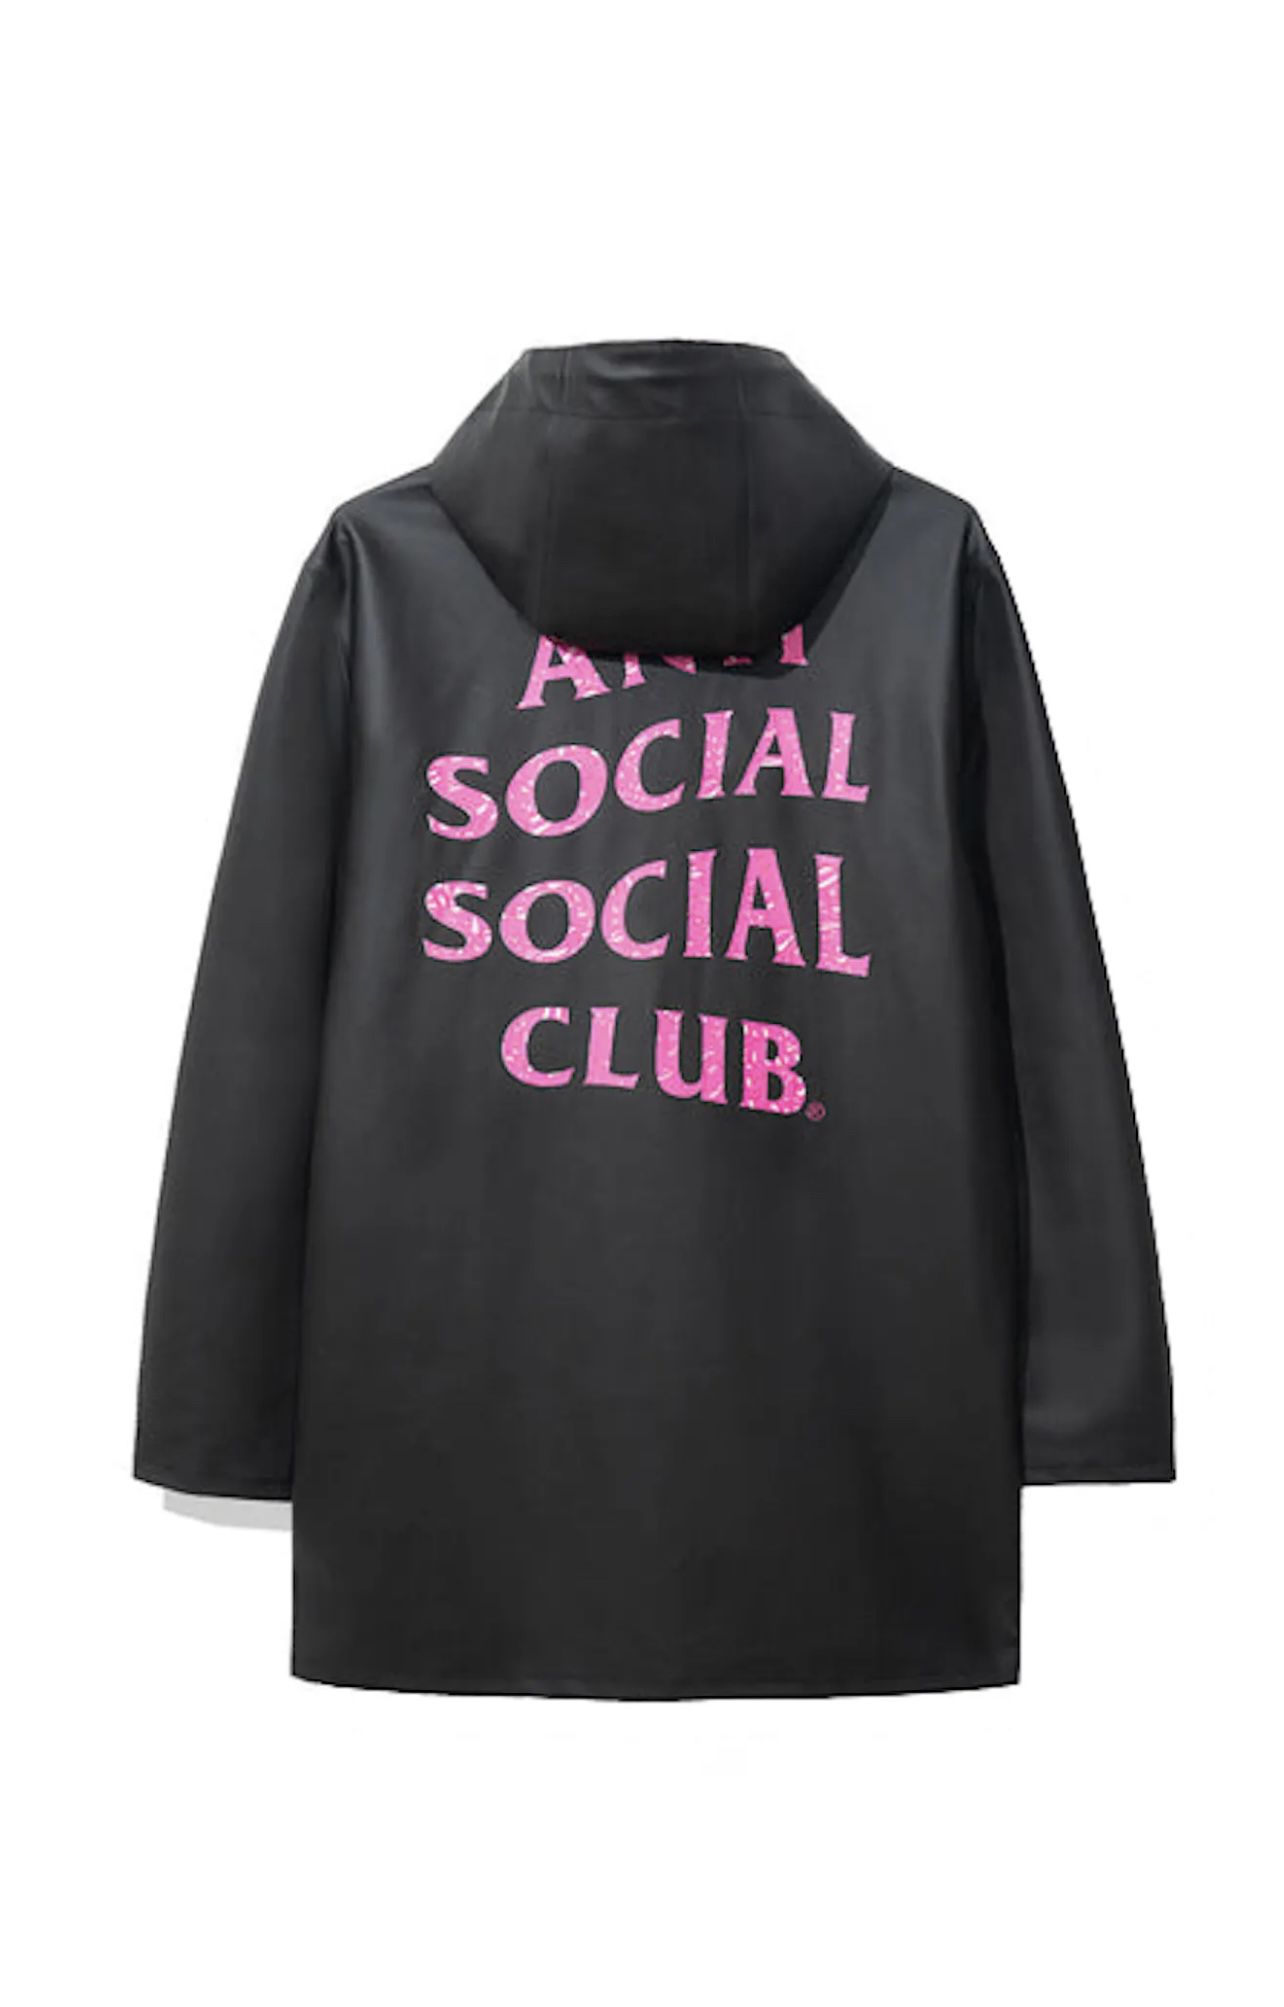 100% Authentic Anti Social Social Club x Stutterheim Raincoat!